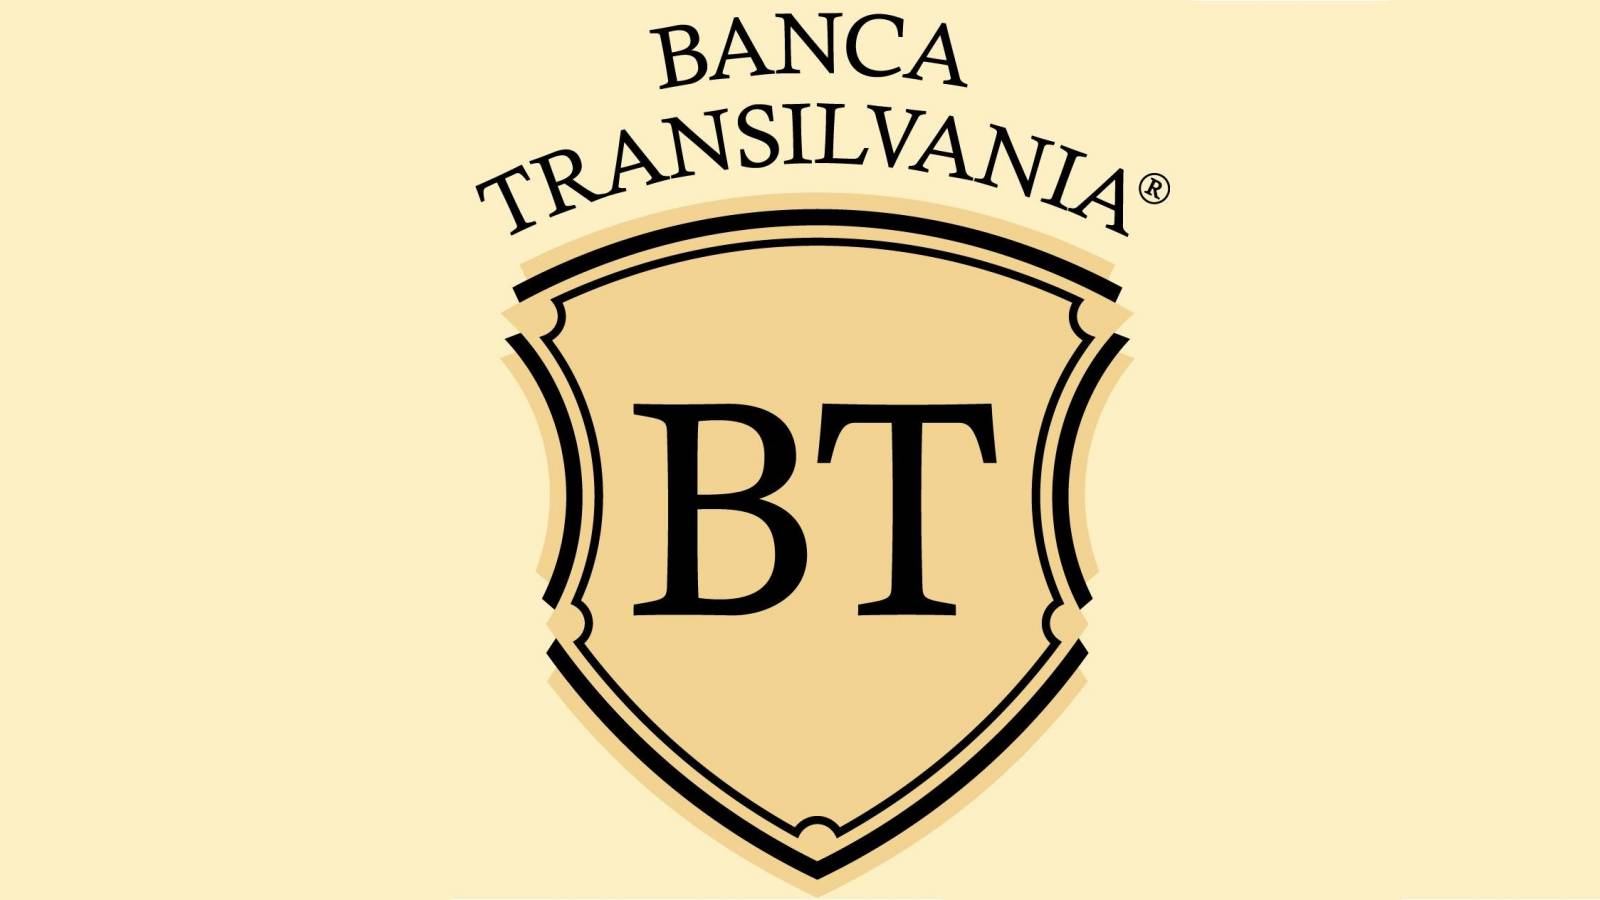 BANCA Transilvania happiness